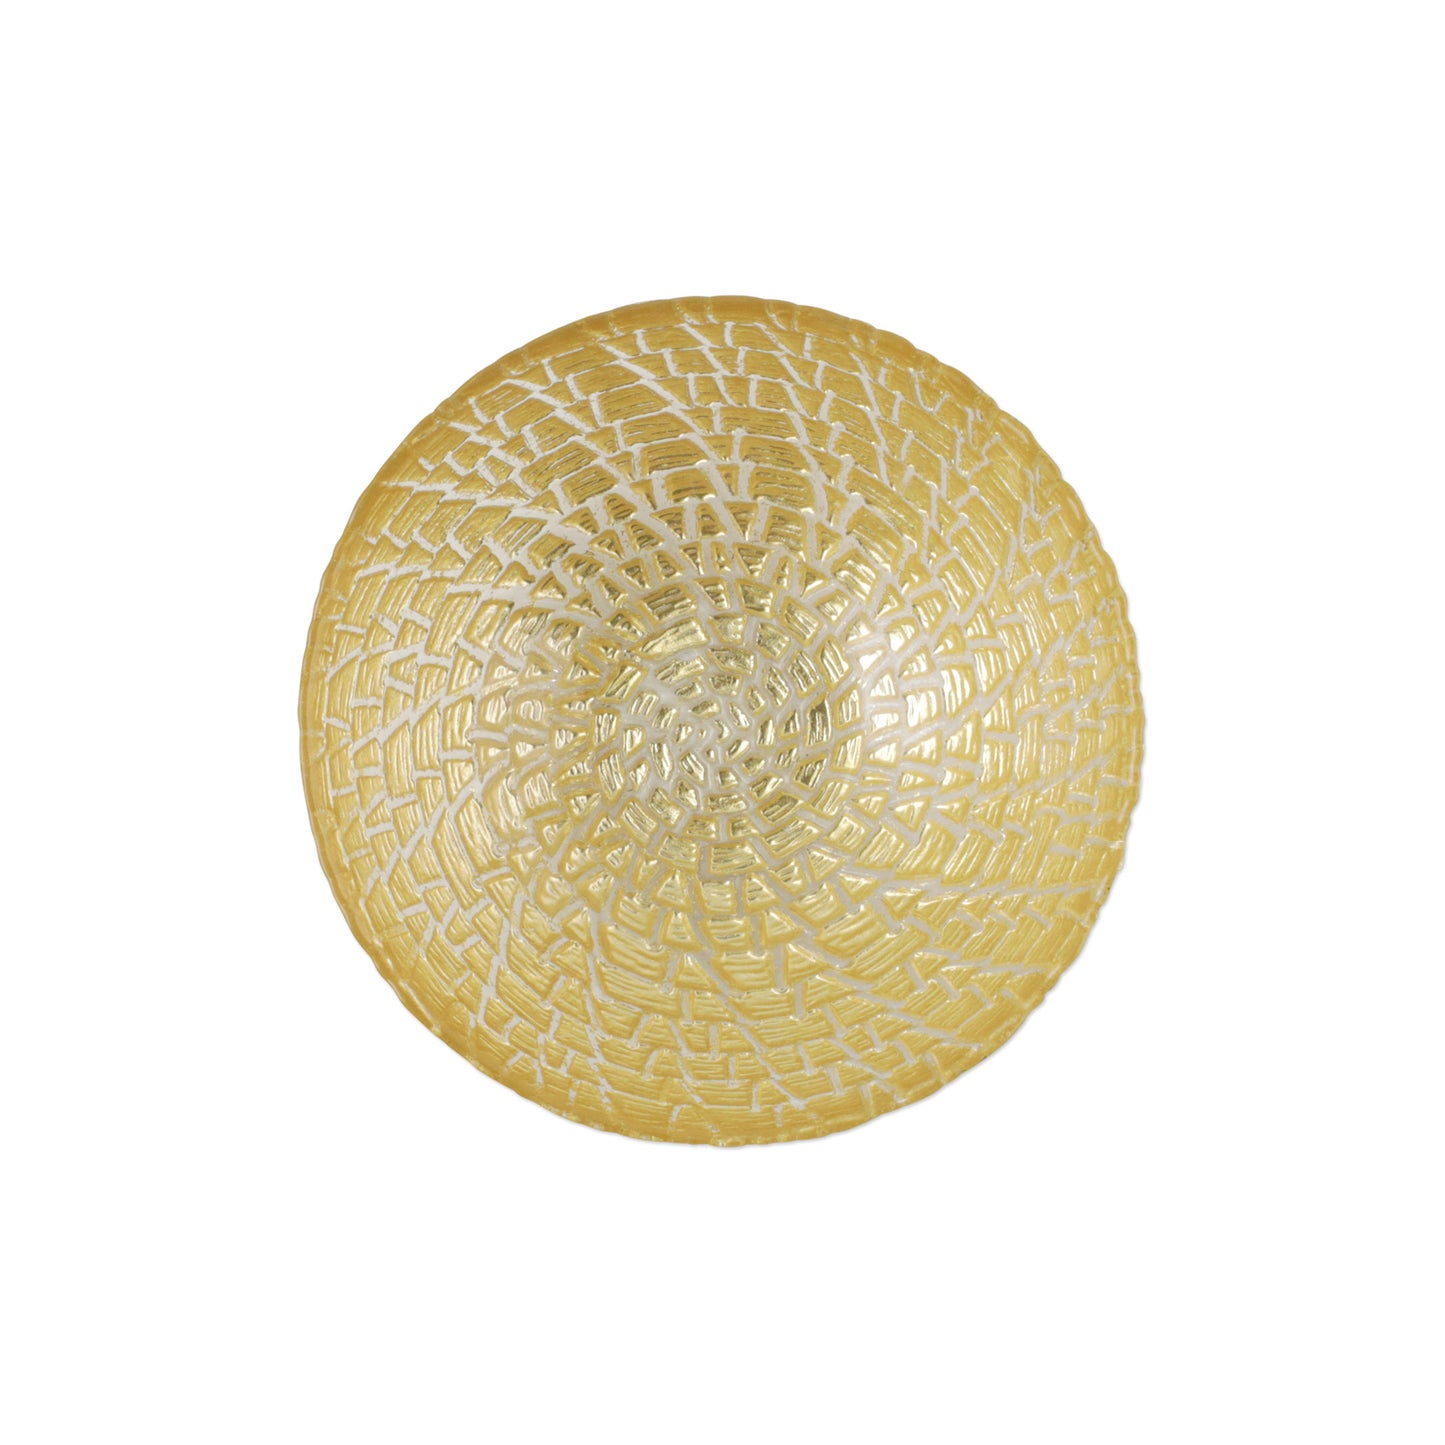 Vietri Rufolo Glass Gold Crocodile Small Bowl - Italian Handmade Decorative Dish